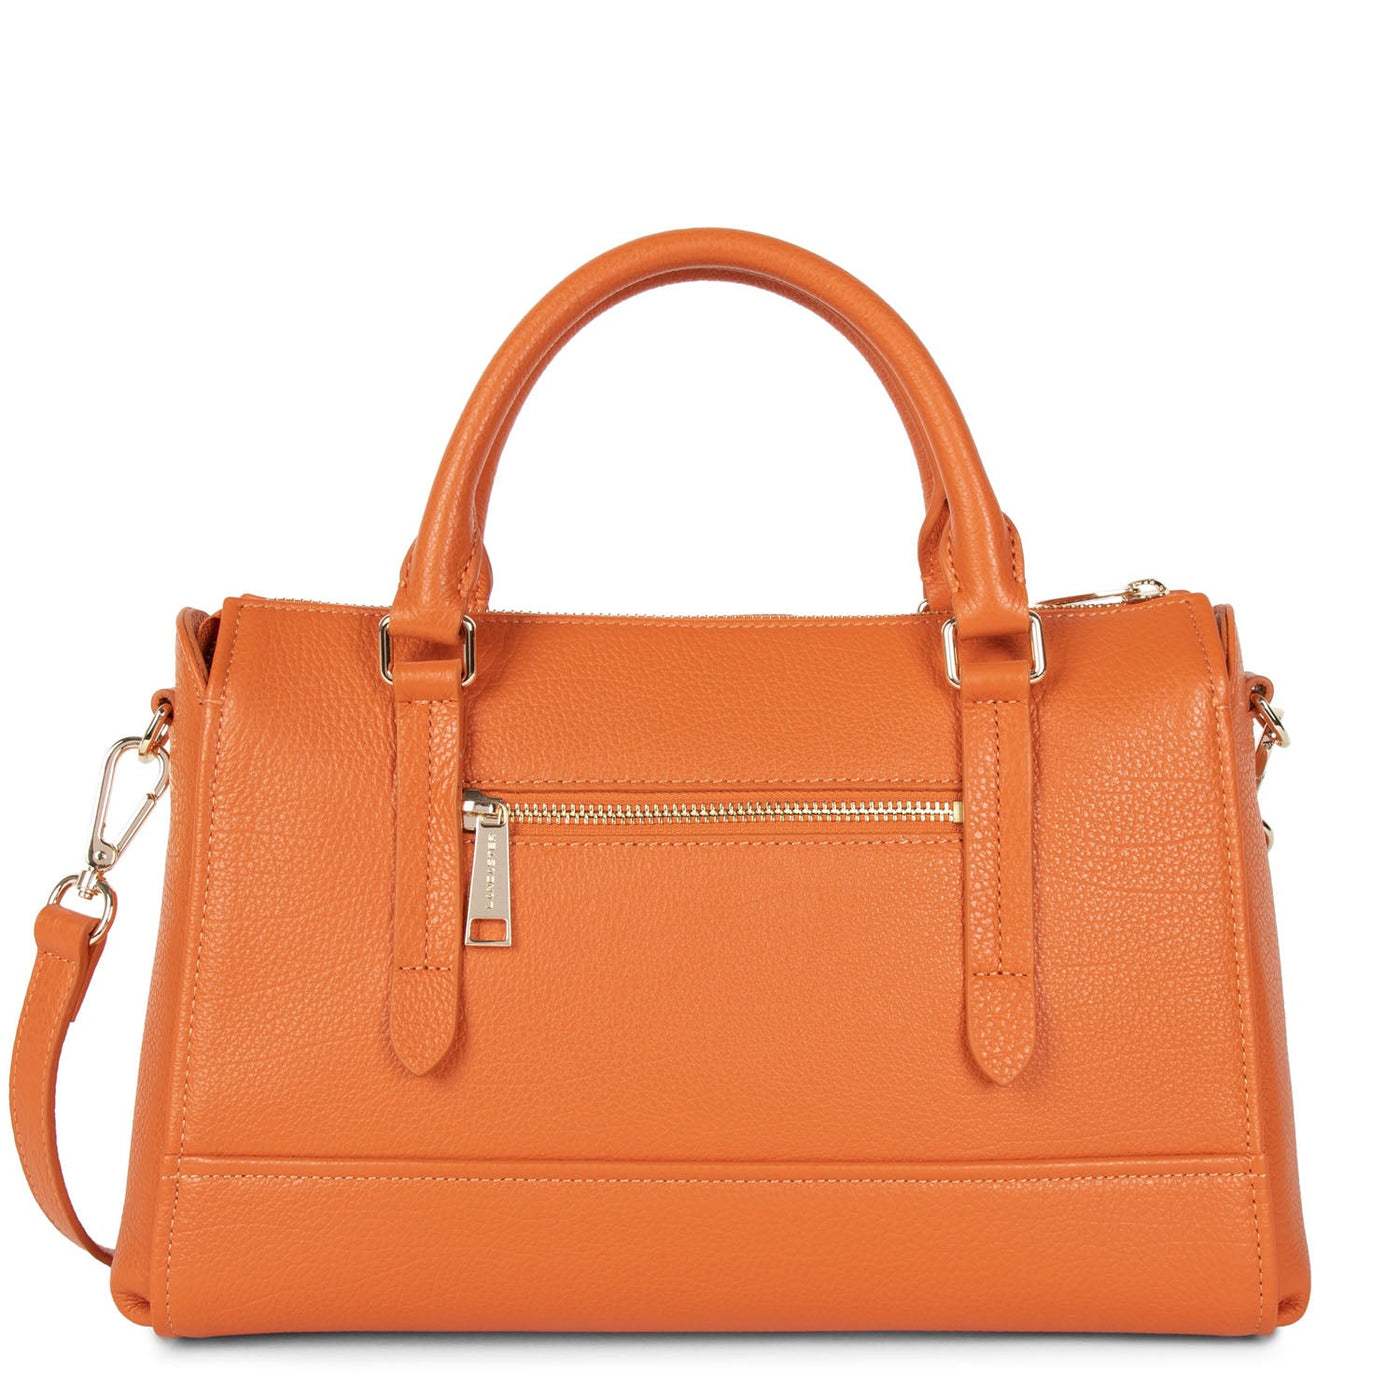 handbag - dune #couleur_orange